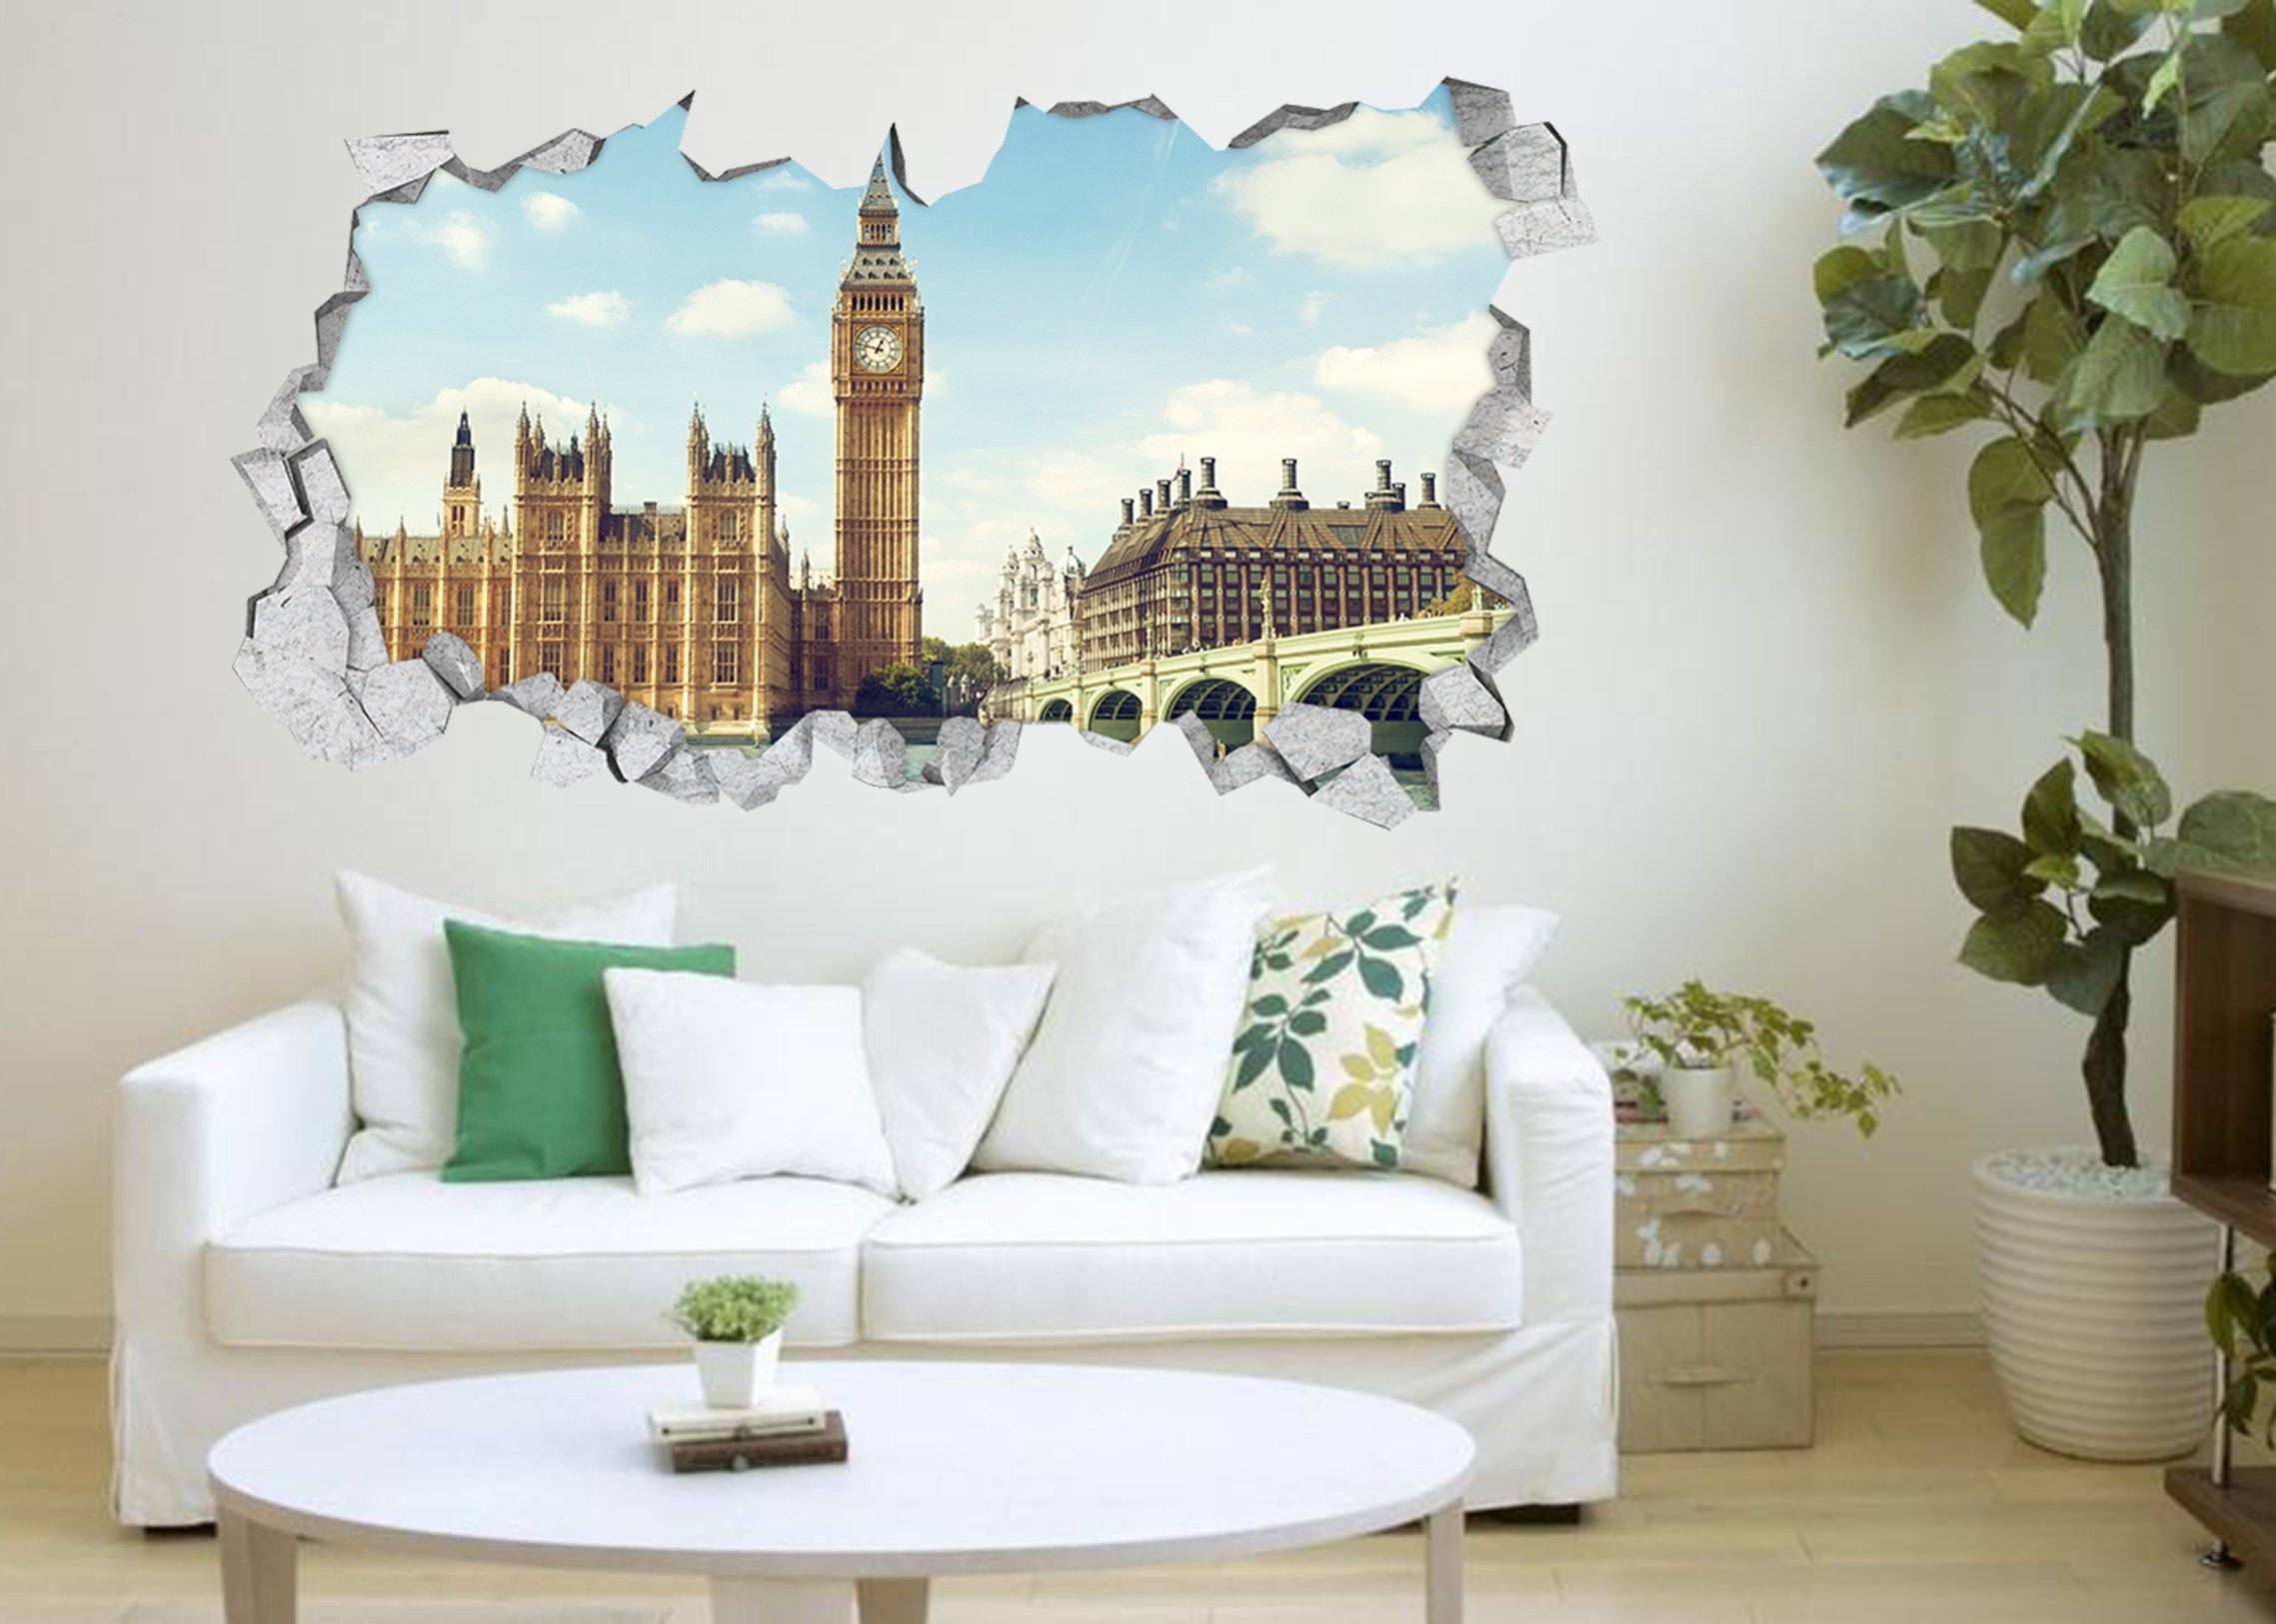 3D London Scenery 332 Broken Wall Murals Wallpaper AJ Wallpaper 